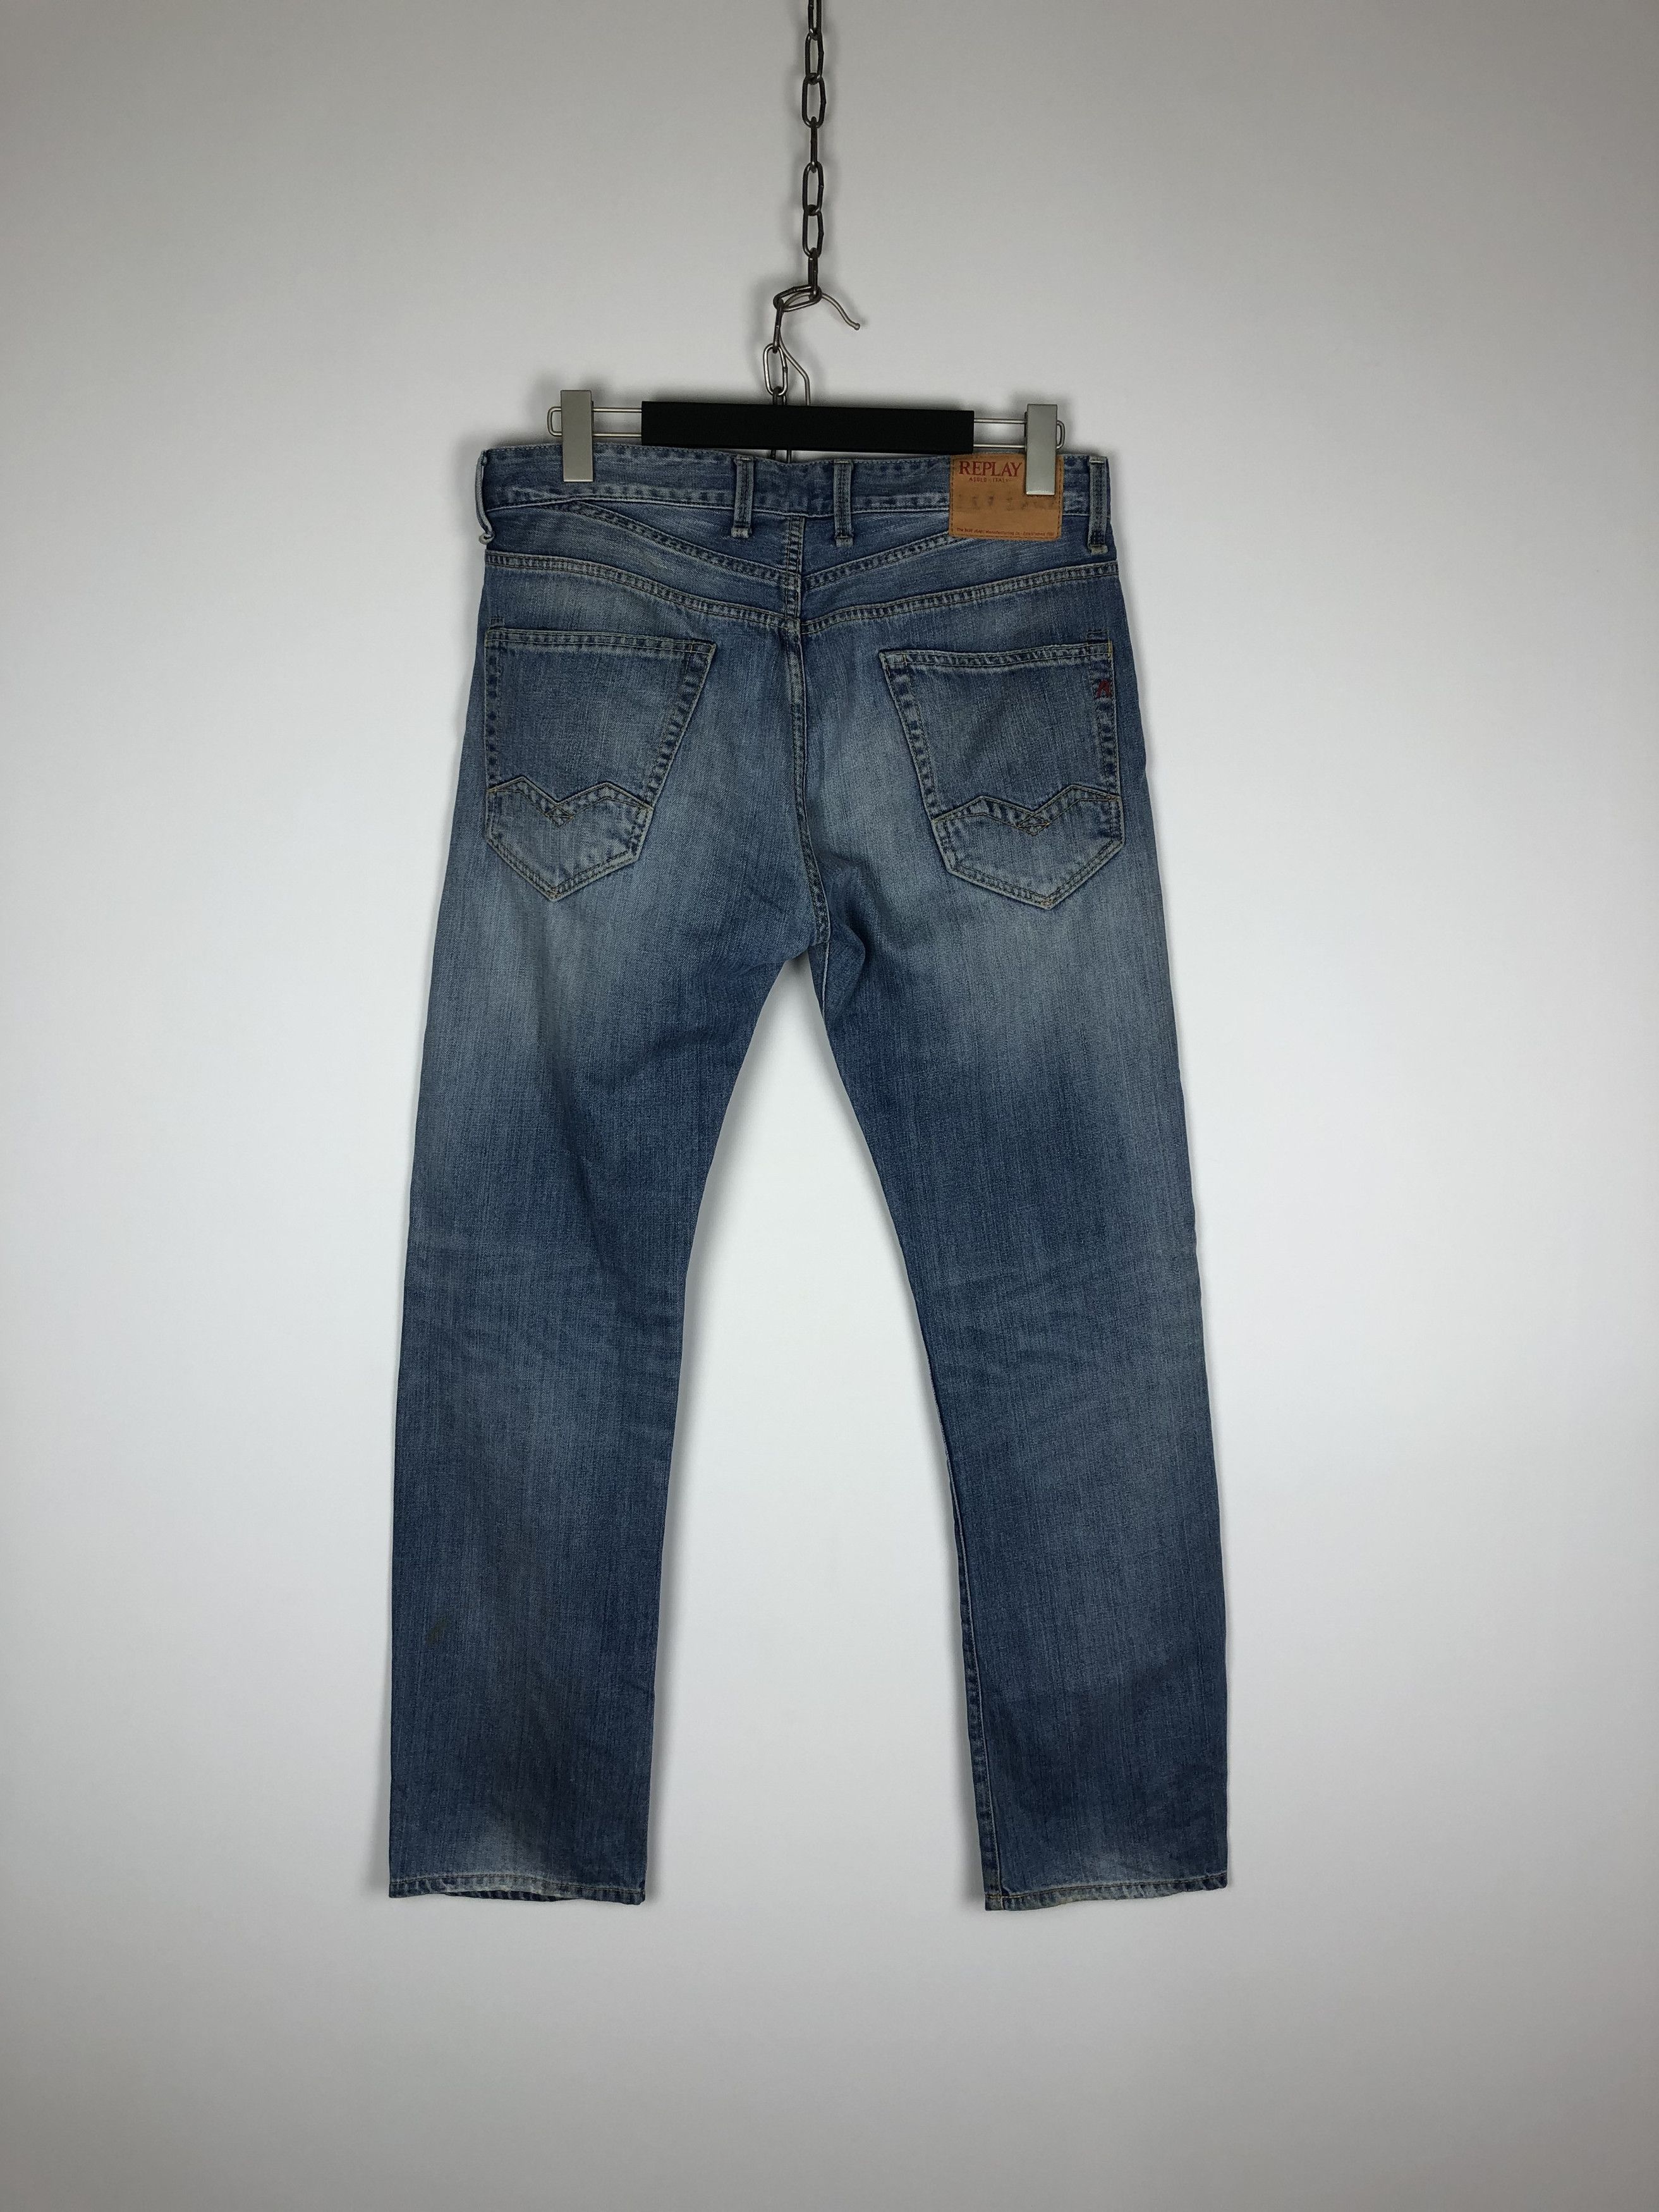 Vintage REPLAY Denim Jeans Pants Franky Vintage Trousers size 32x30 Size US 32 / EU 48 - 7 Thumbnail